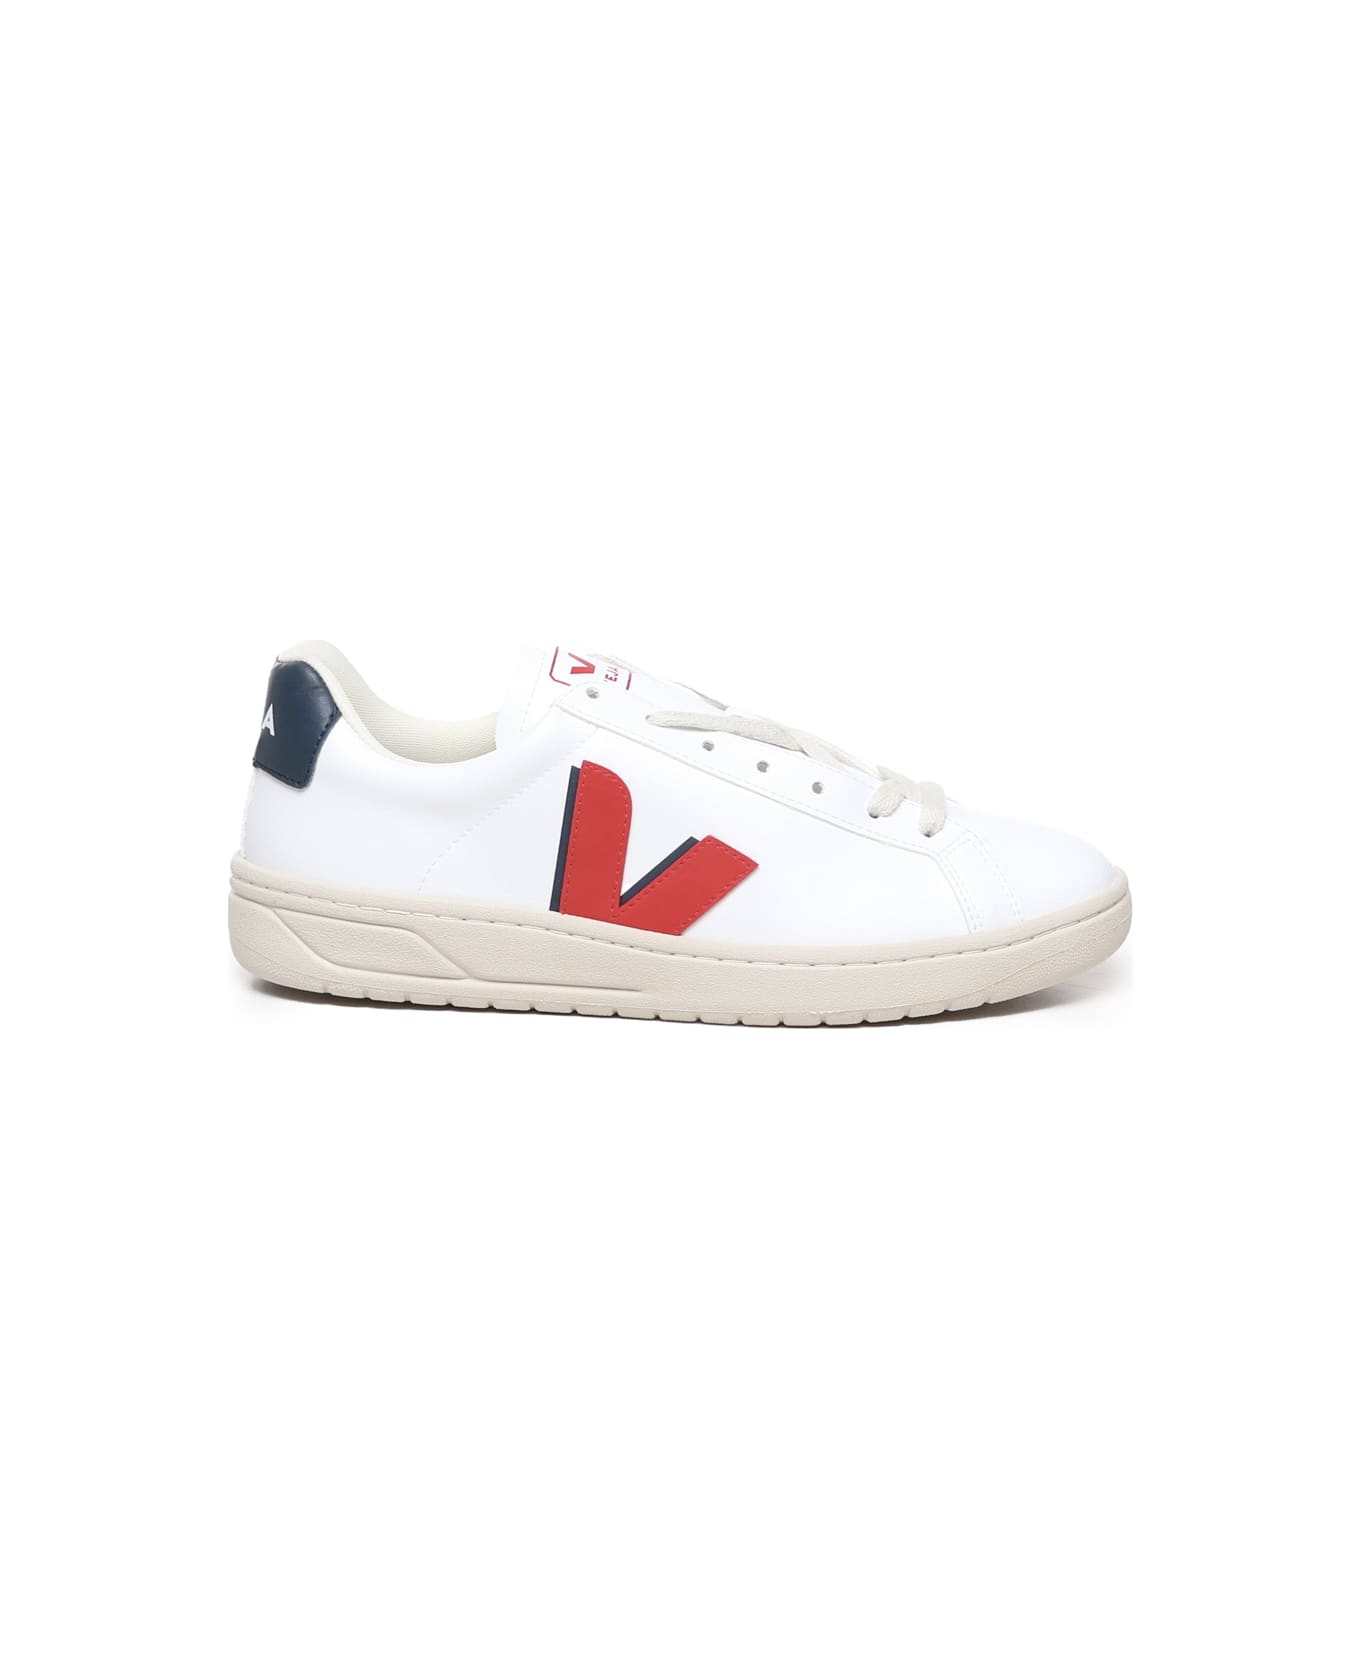 Veja Urca Cwl Sneakers - White, blue, red